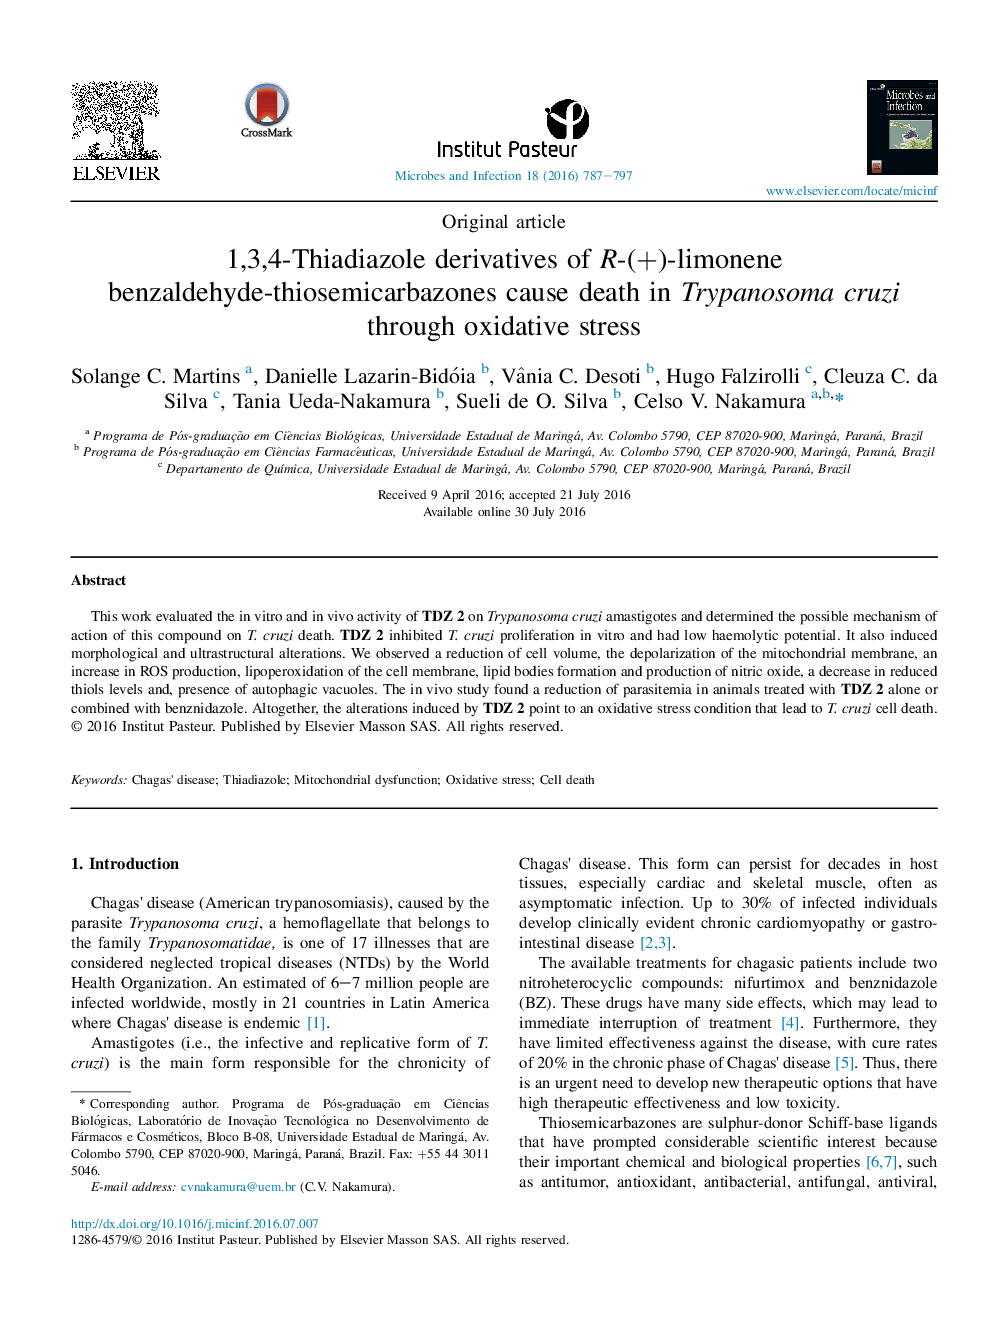 1,3,4-Thiadiazole derivatives of R-(+)-limonene benzaldehyde-thiosemicarbazones cause death in Trypanosoma cruzi through oxidative stress